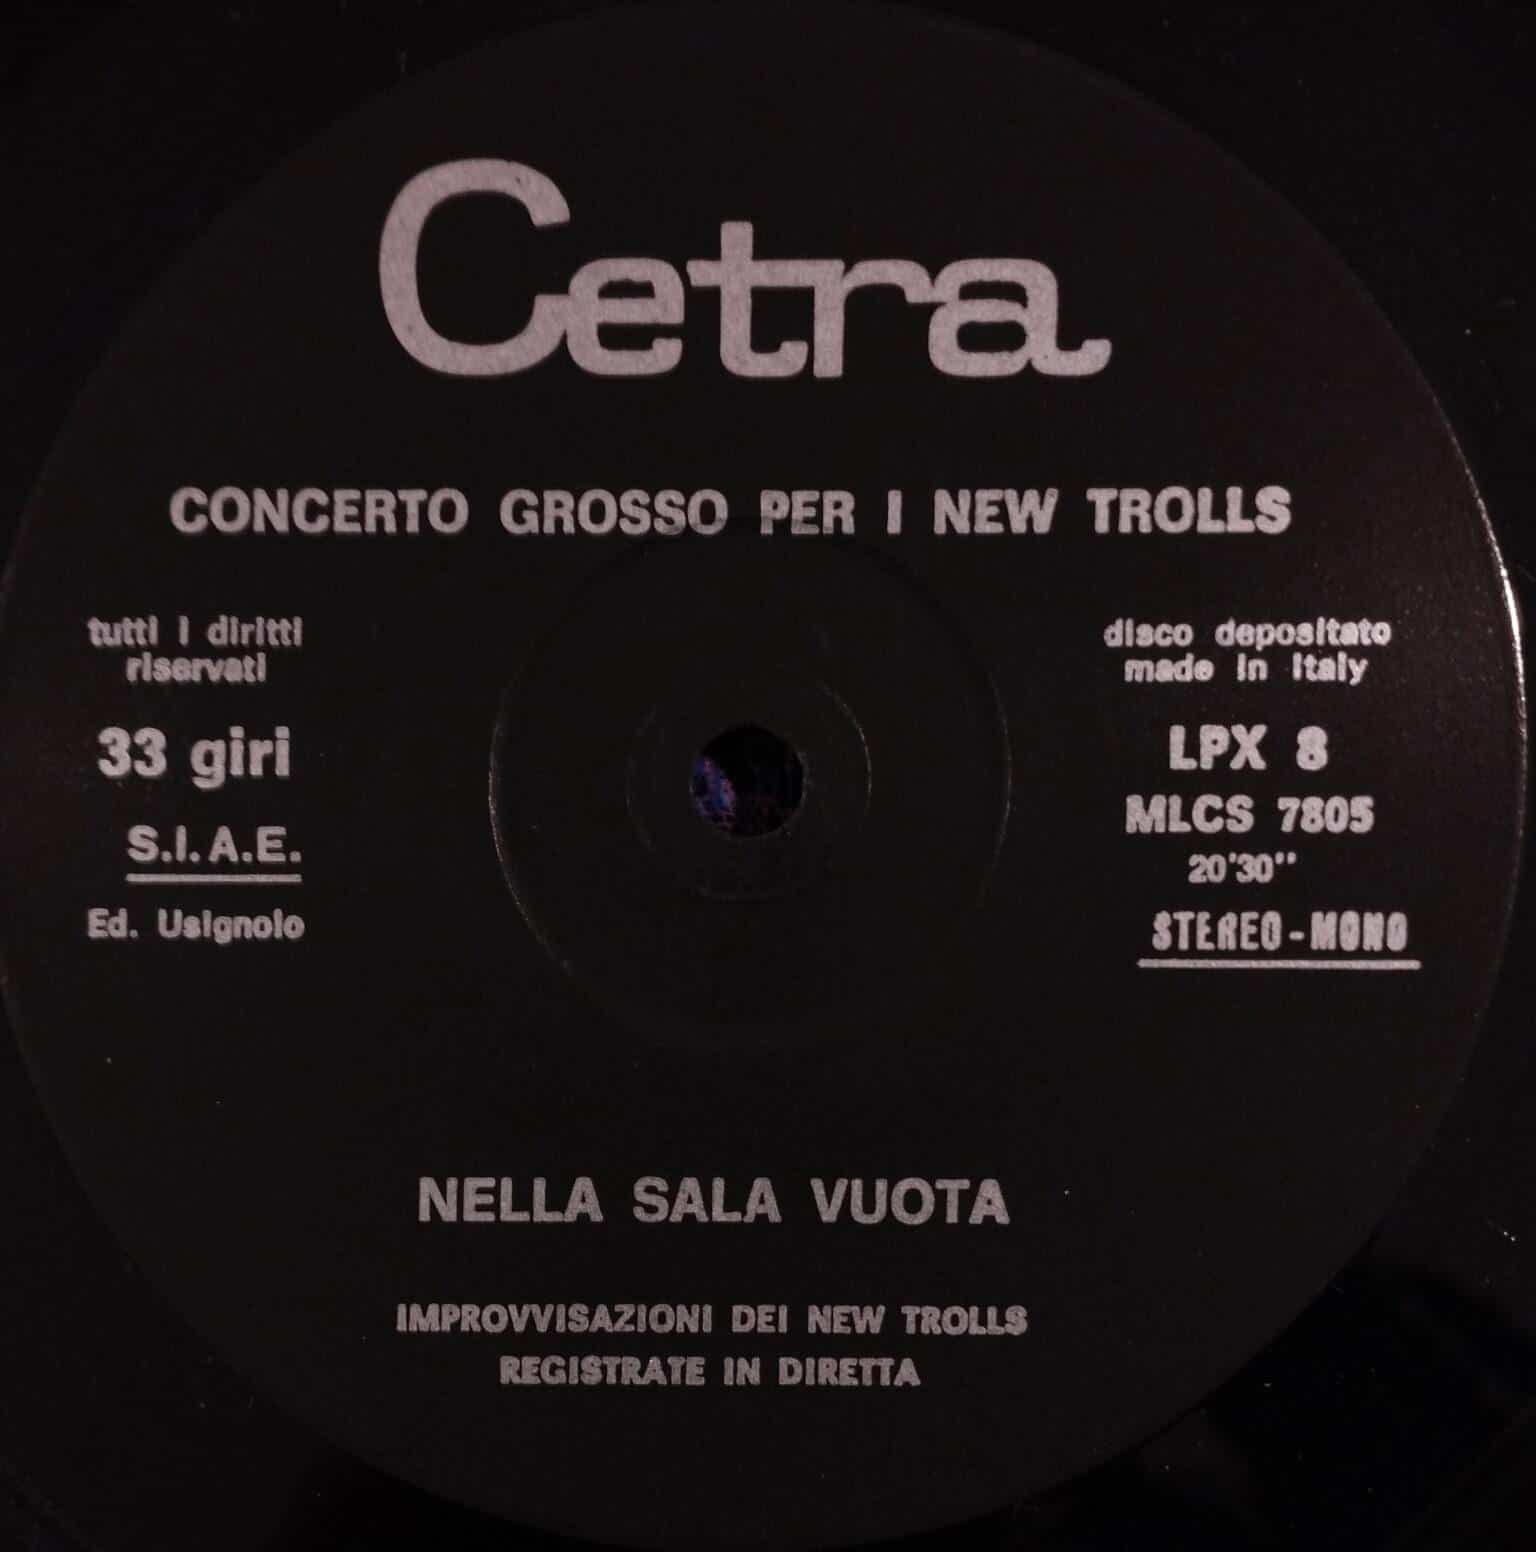 New Trolls: Concerto grosso per i new trolls Hi-Fi e Vinili